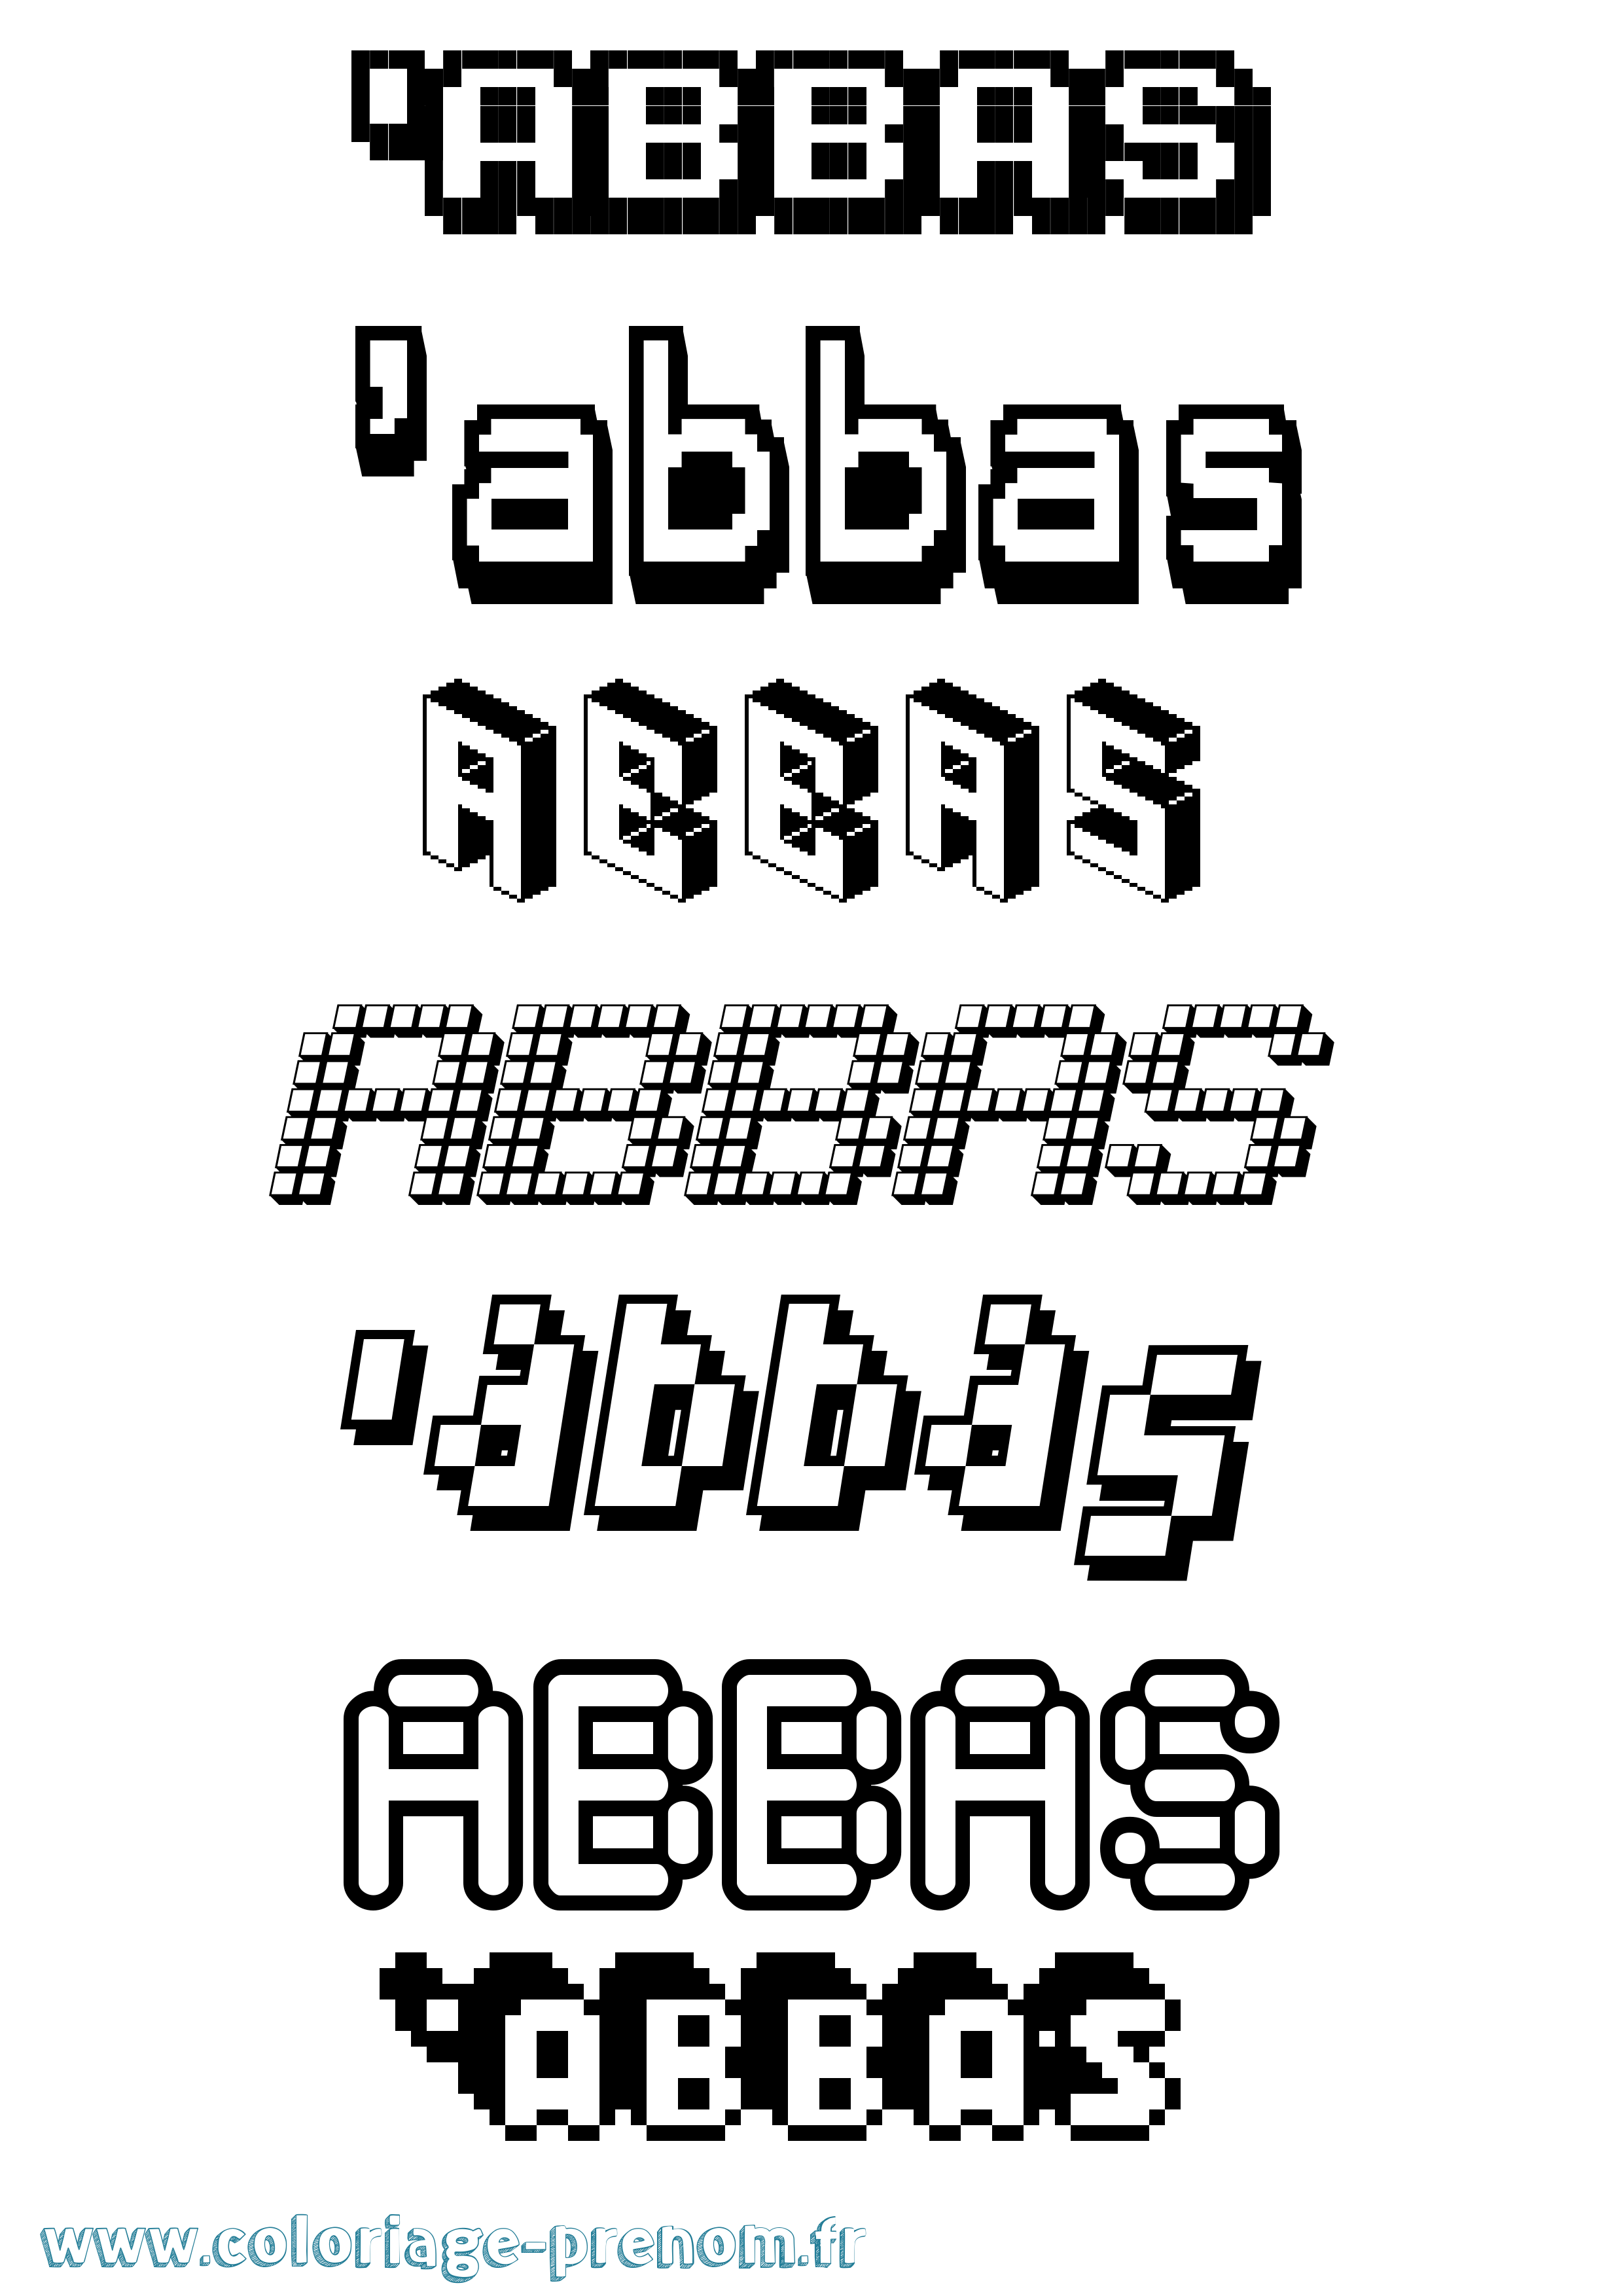 Coloriage prénom 'Abbas Pixel